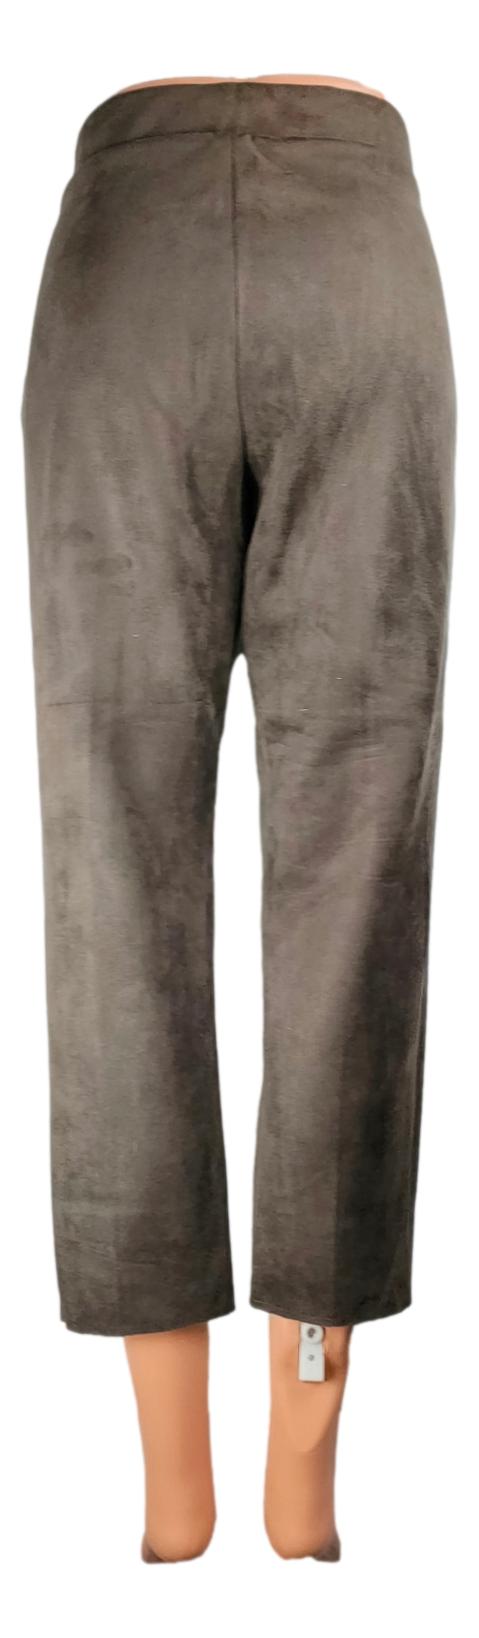 Pantalon Armand Thiery - Taille 40